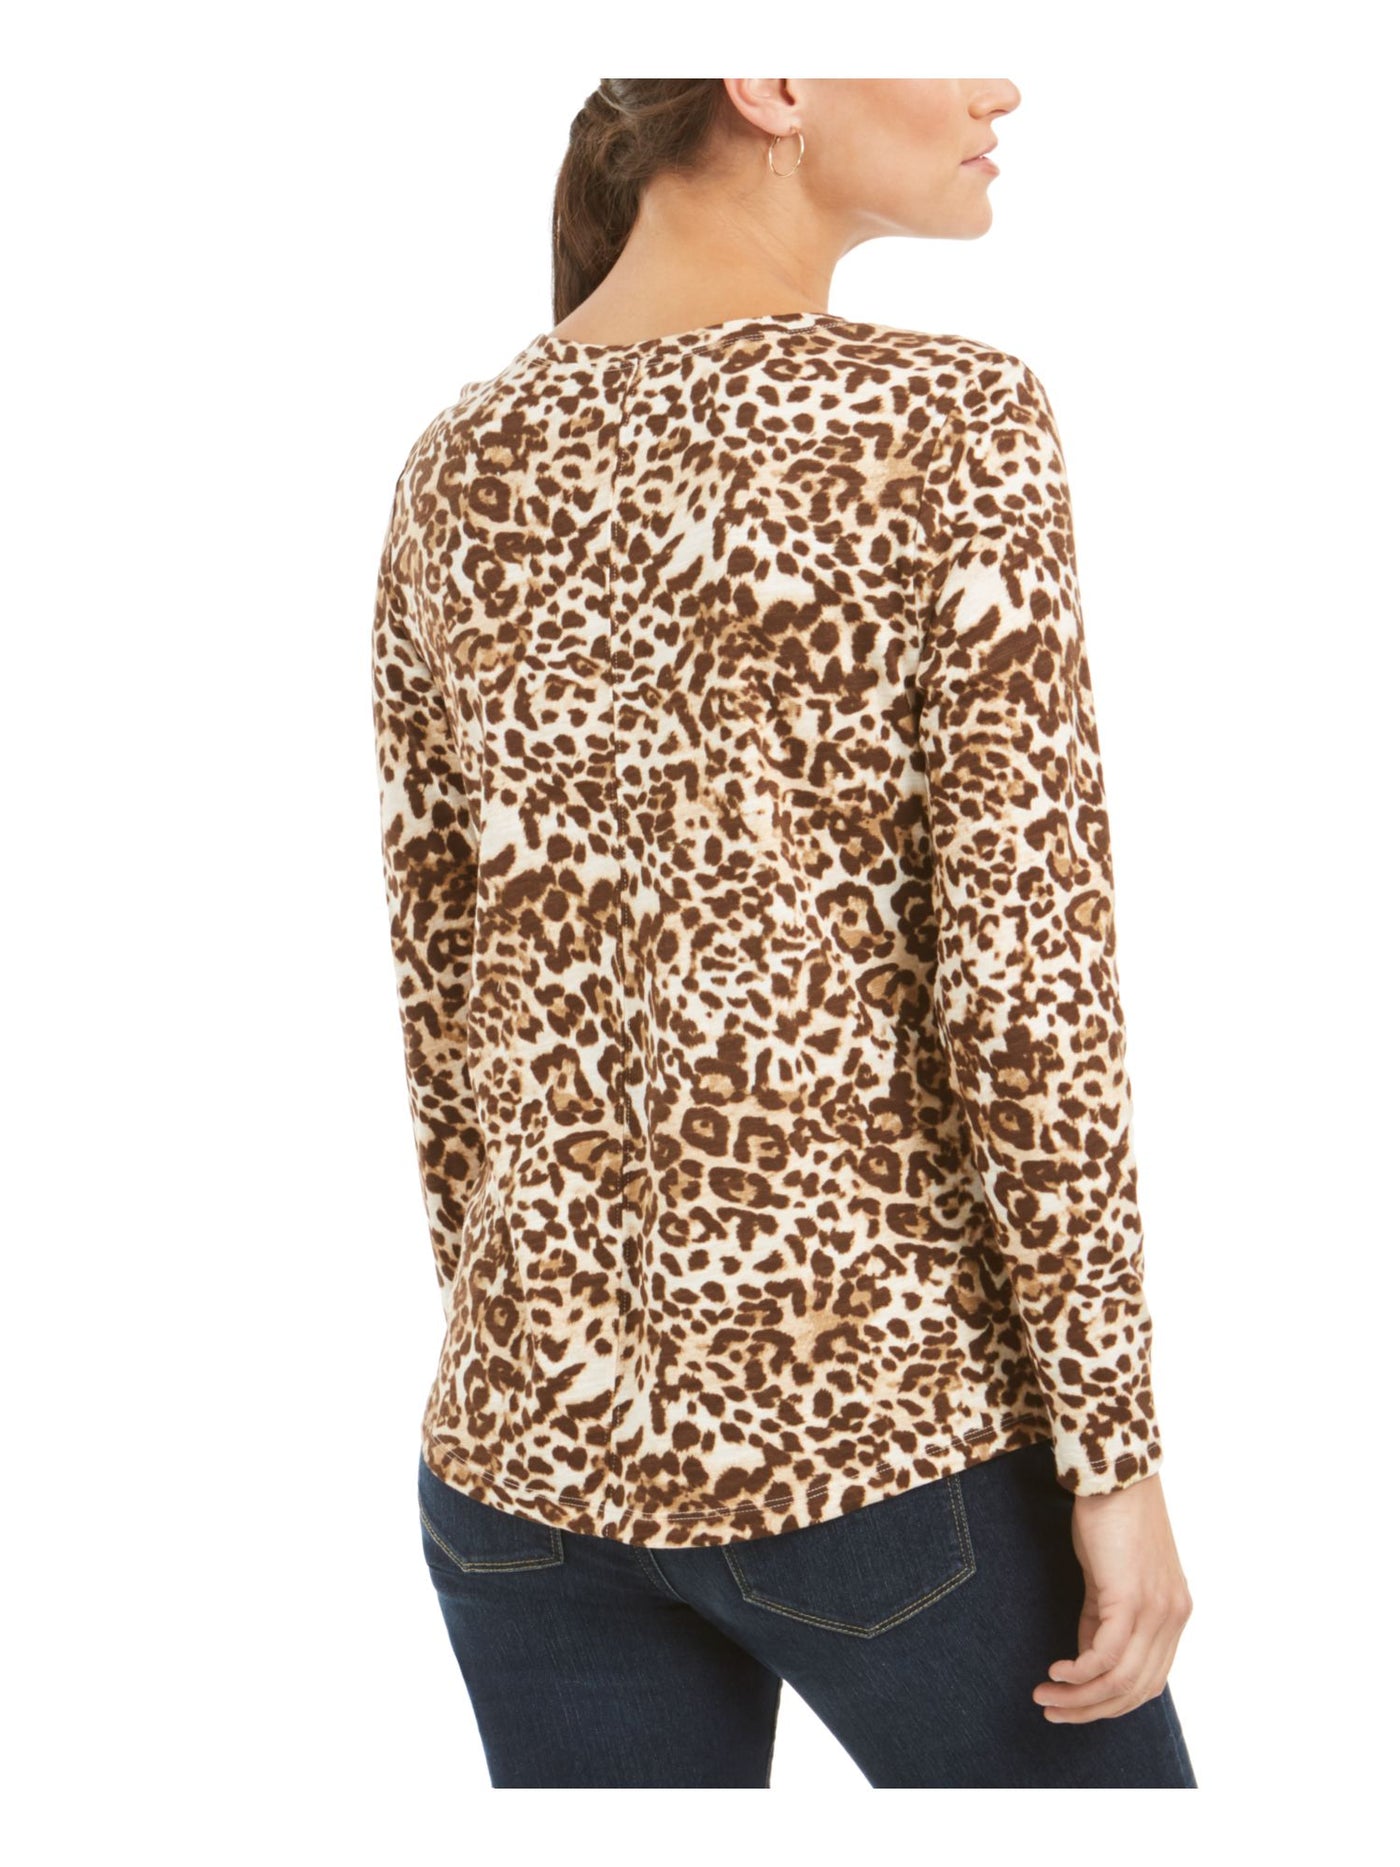 STYLE & COMPANY Womens Brown Animal Print Long Sleeve Jewel Neck Top Size: XS